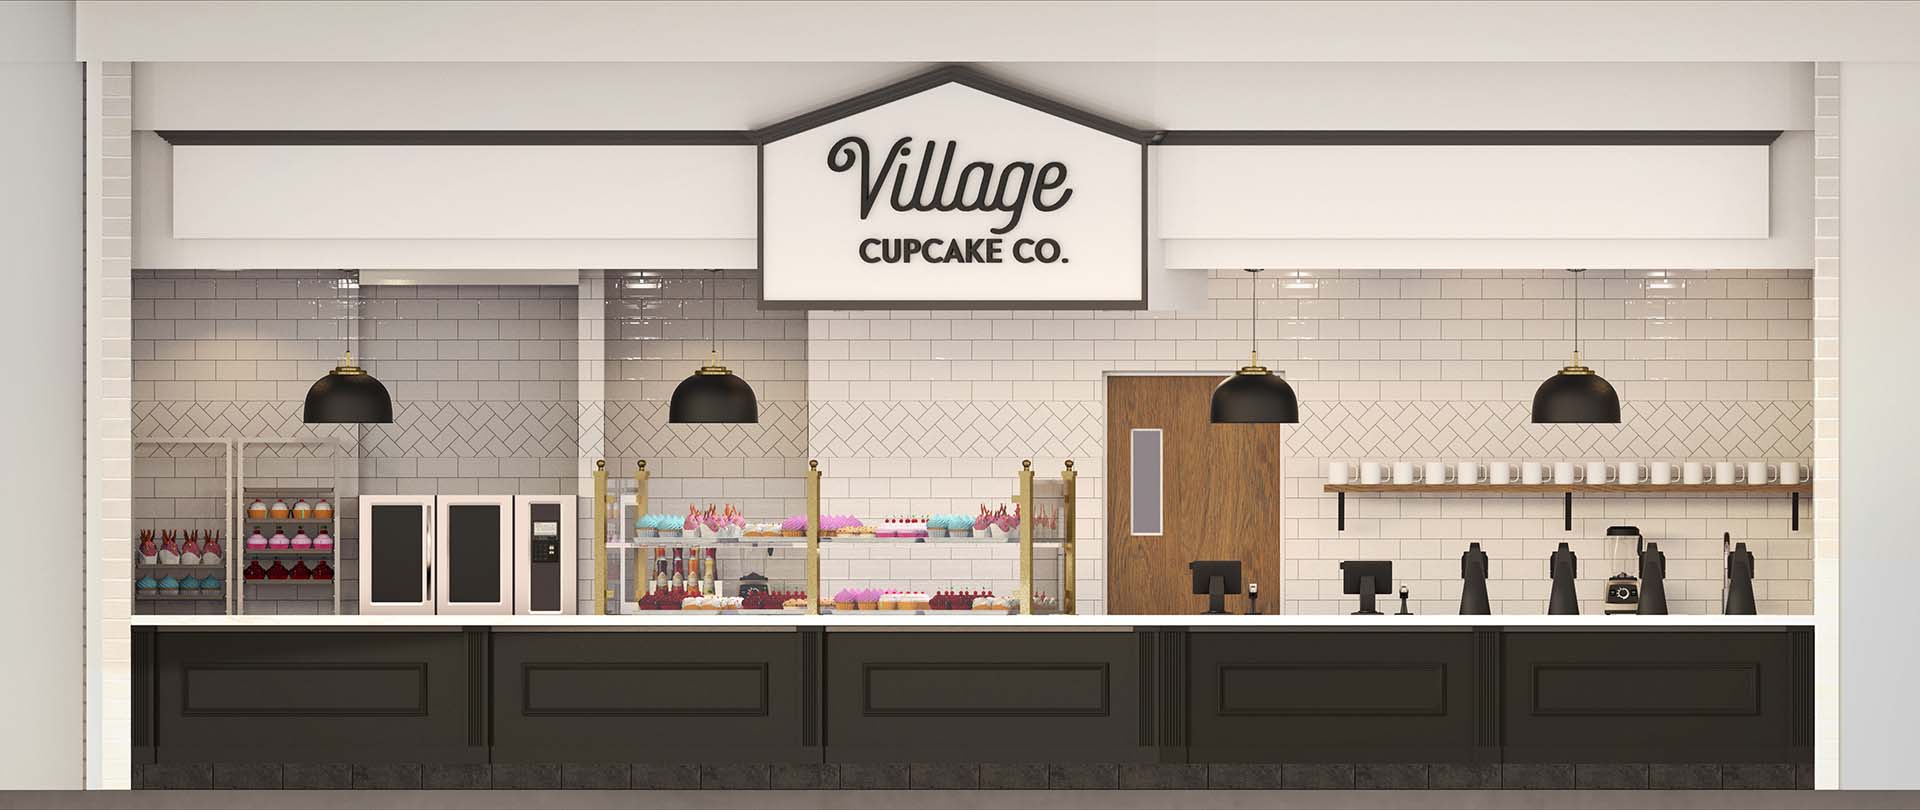 Village Cupcake Company - Commercial 4499-VillageCupcakeCompany-dv2-02b-1920.jpg